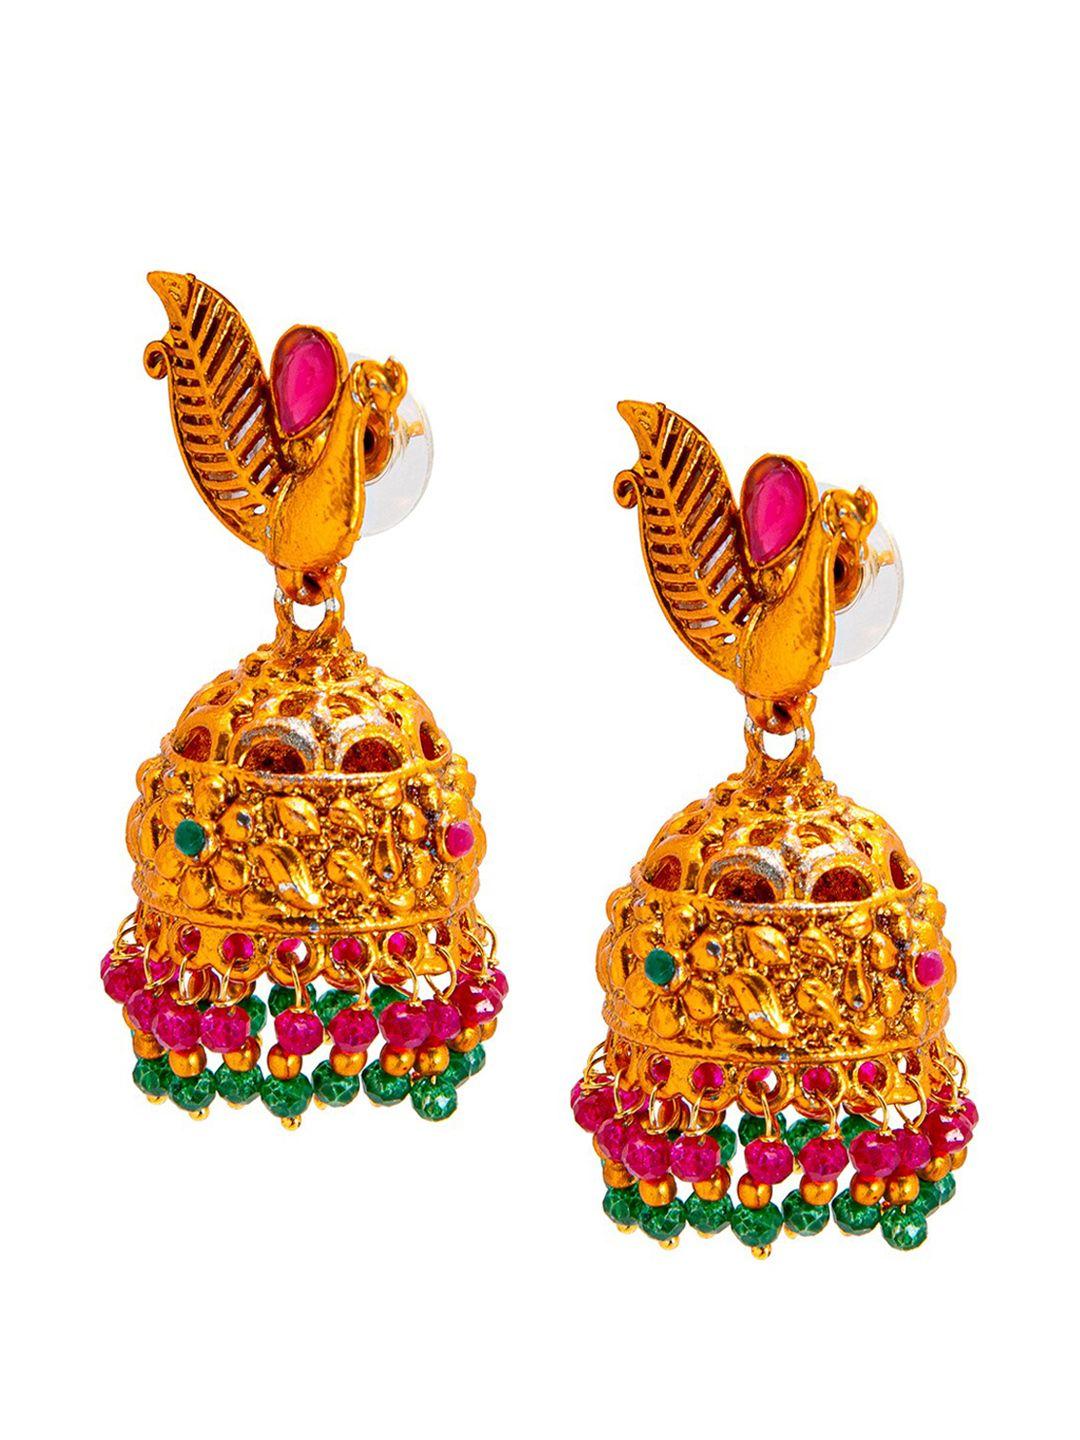 shining jewel - by shivansh gold-toned peacock shaped jhumkas earrings